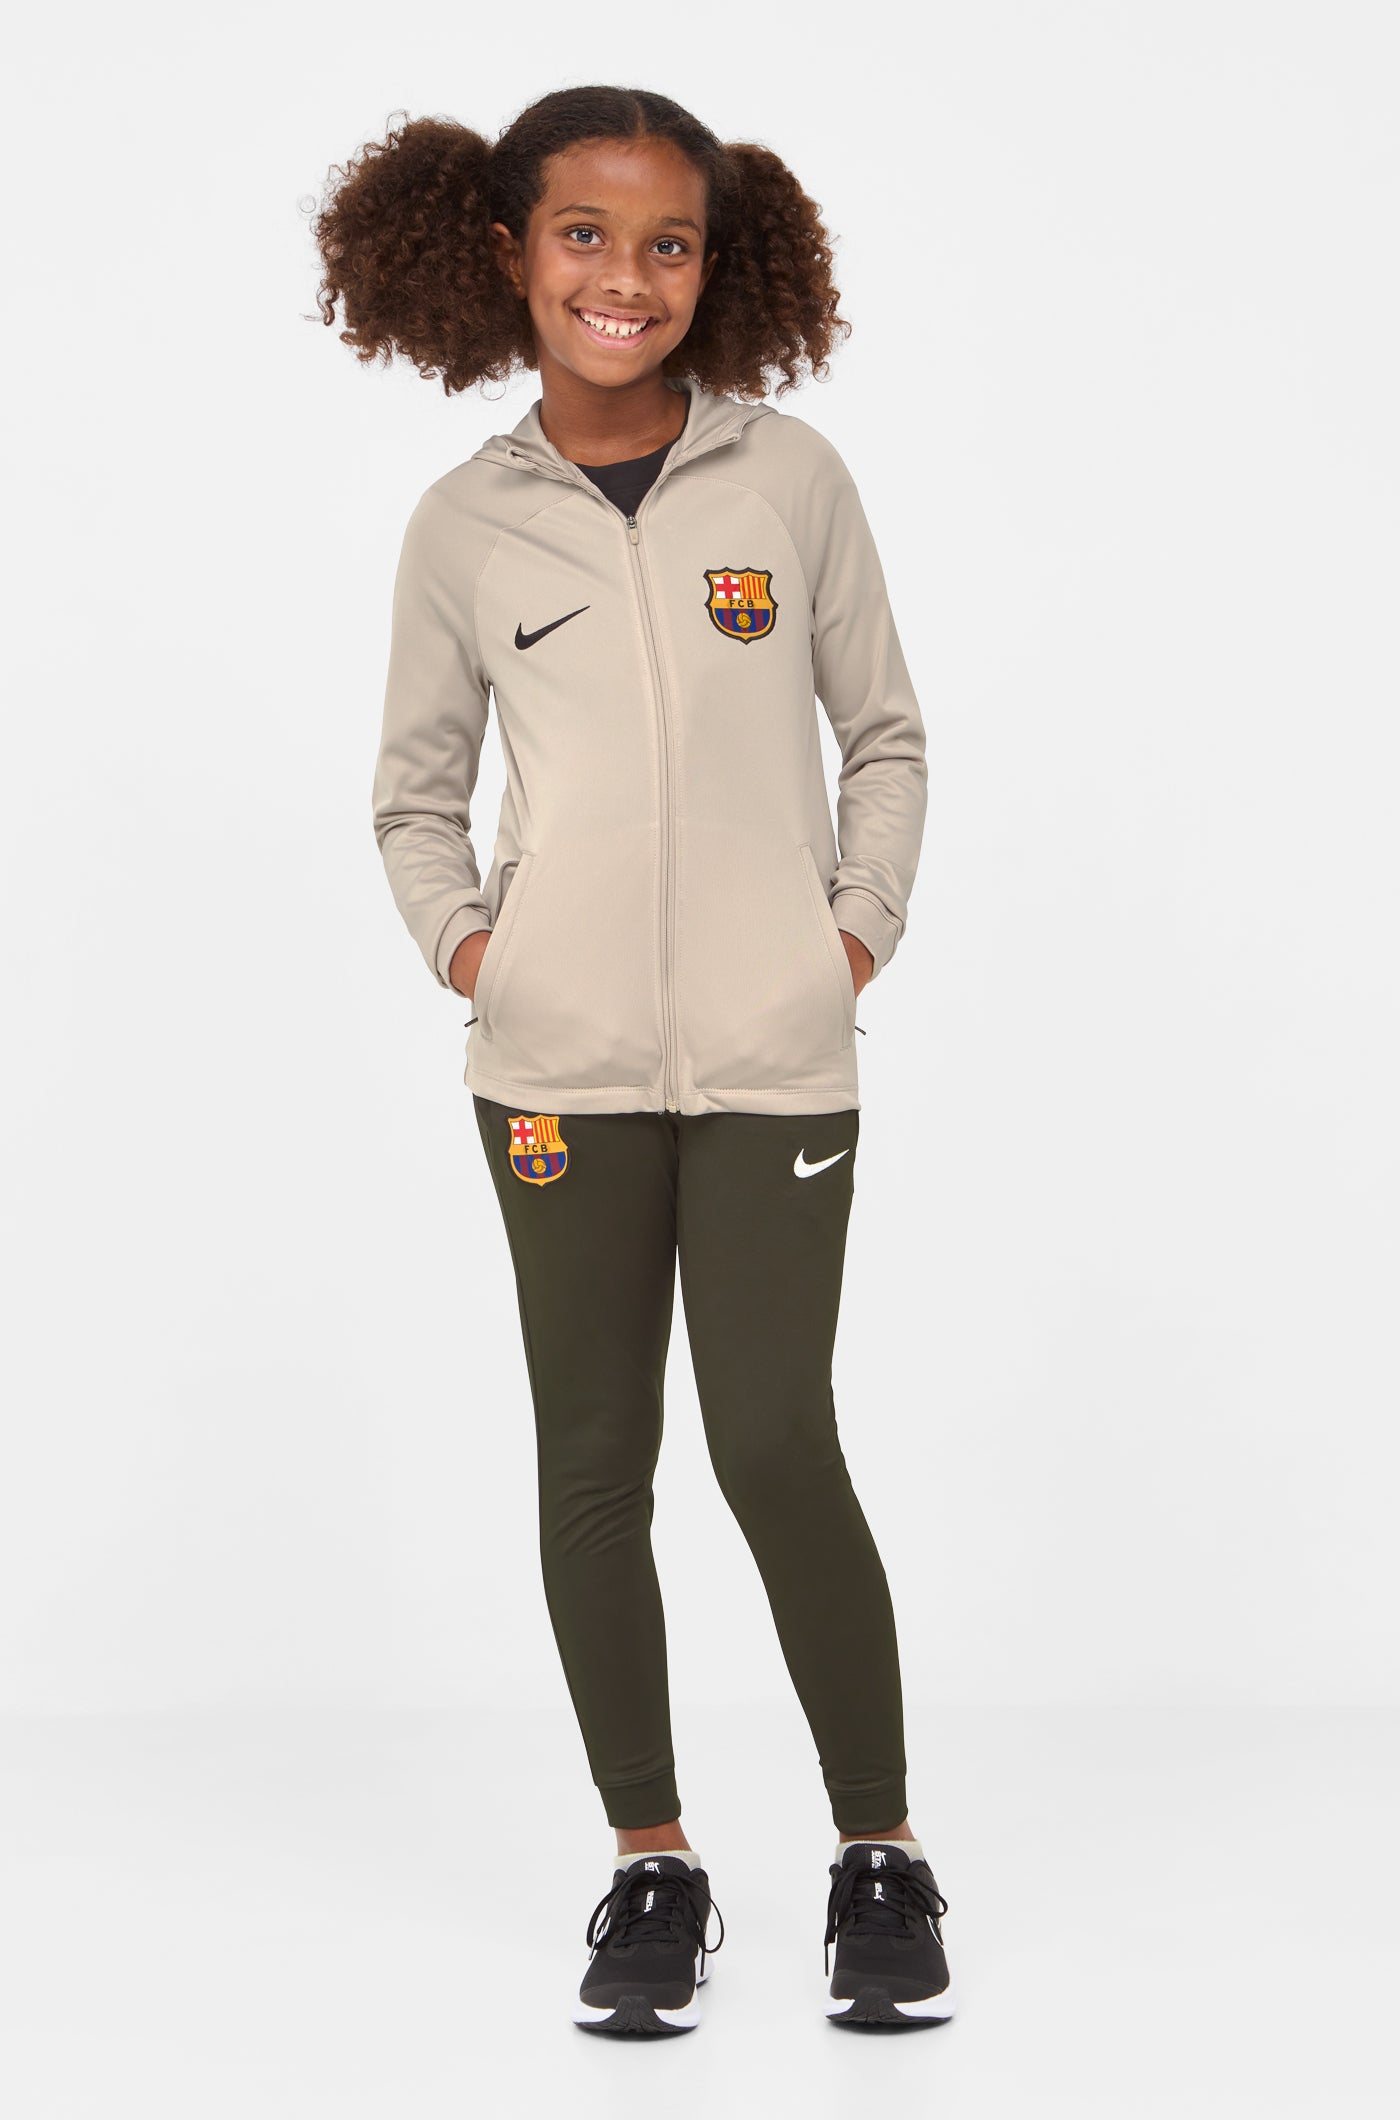 FC Barcelona - Chándal oficial para niño - Chaqueta y pantalón largos